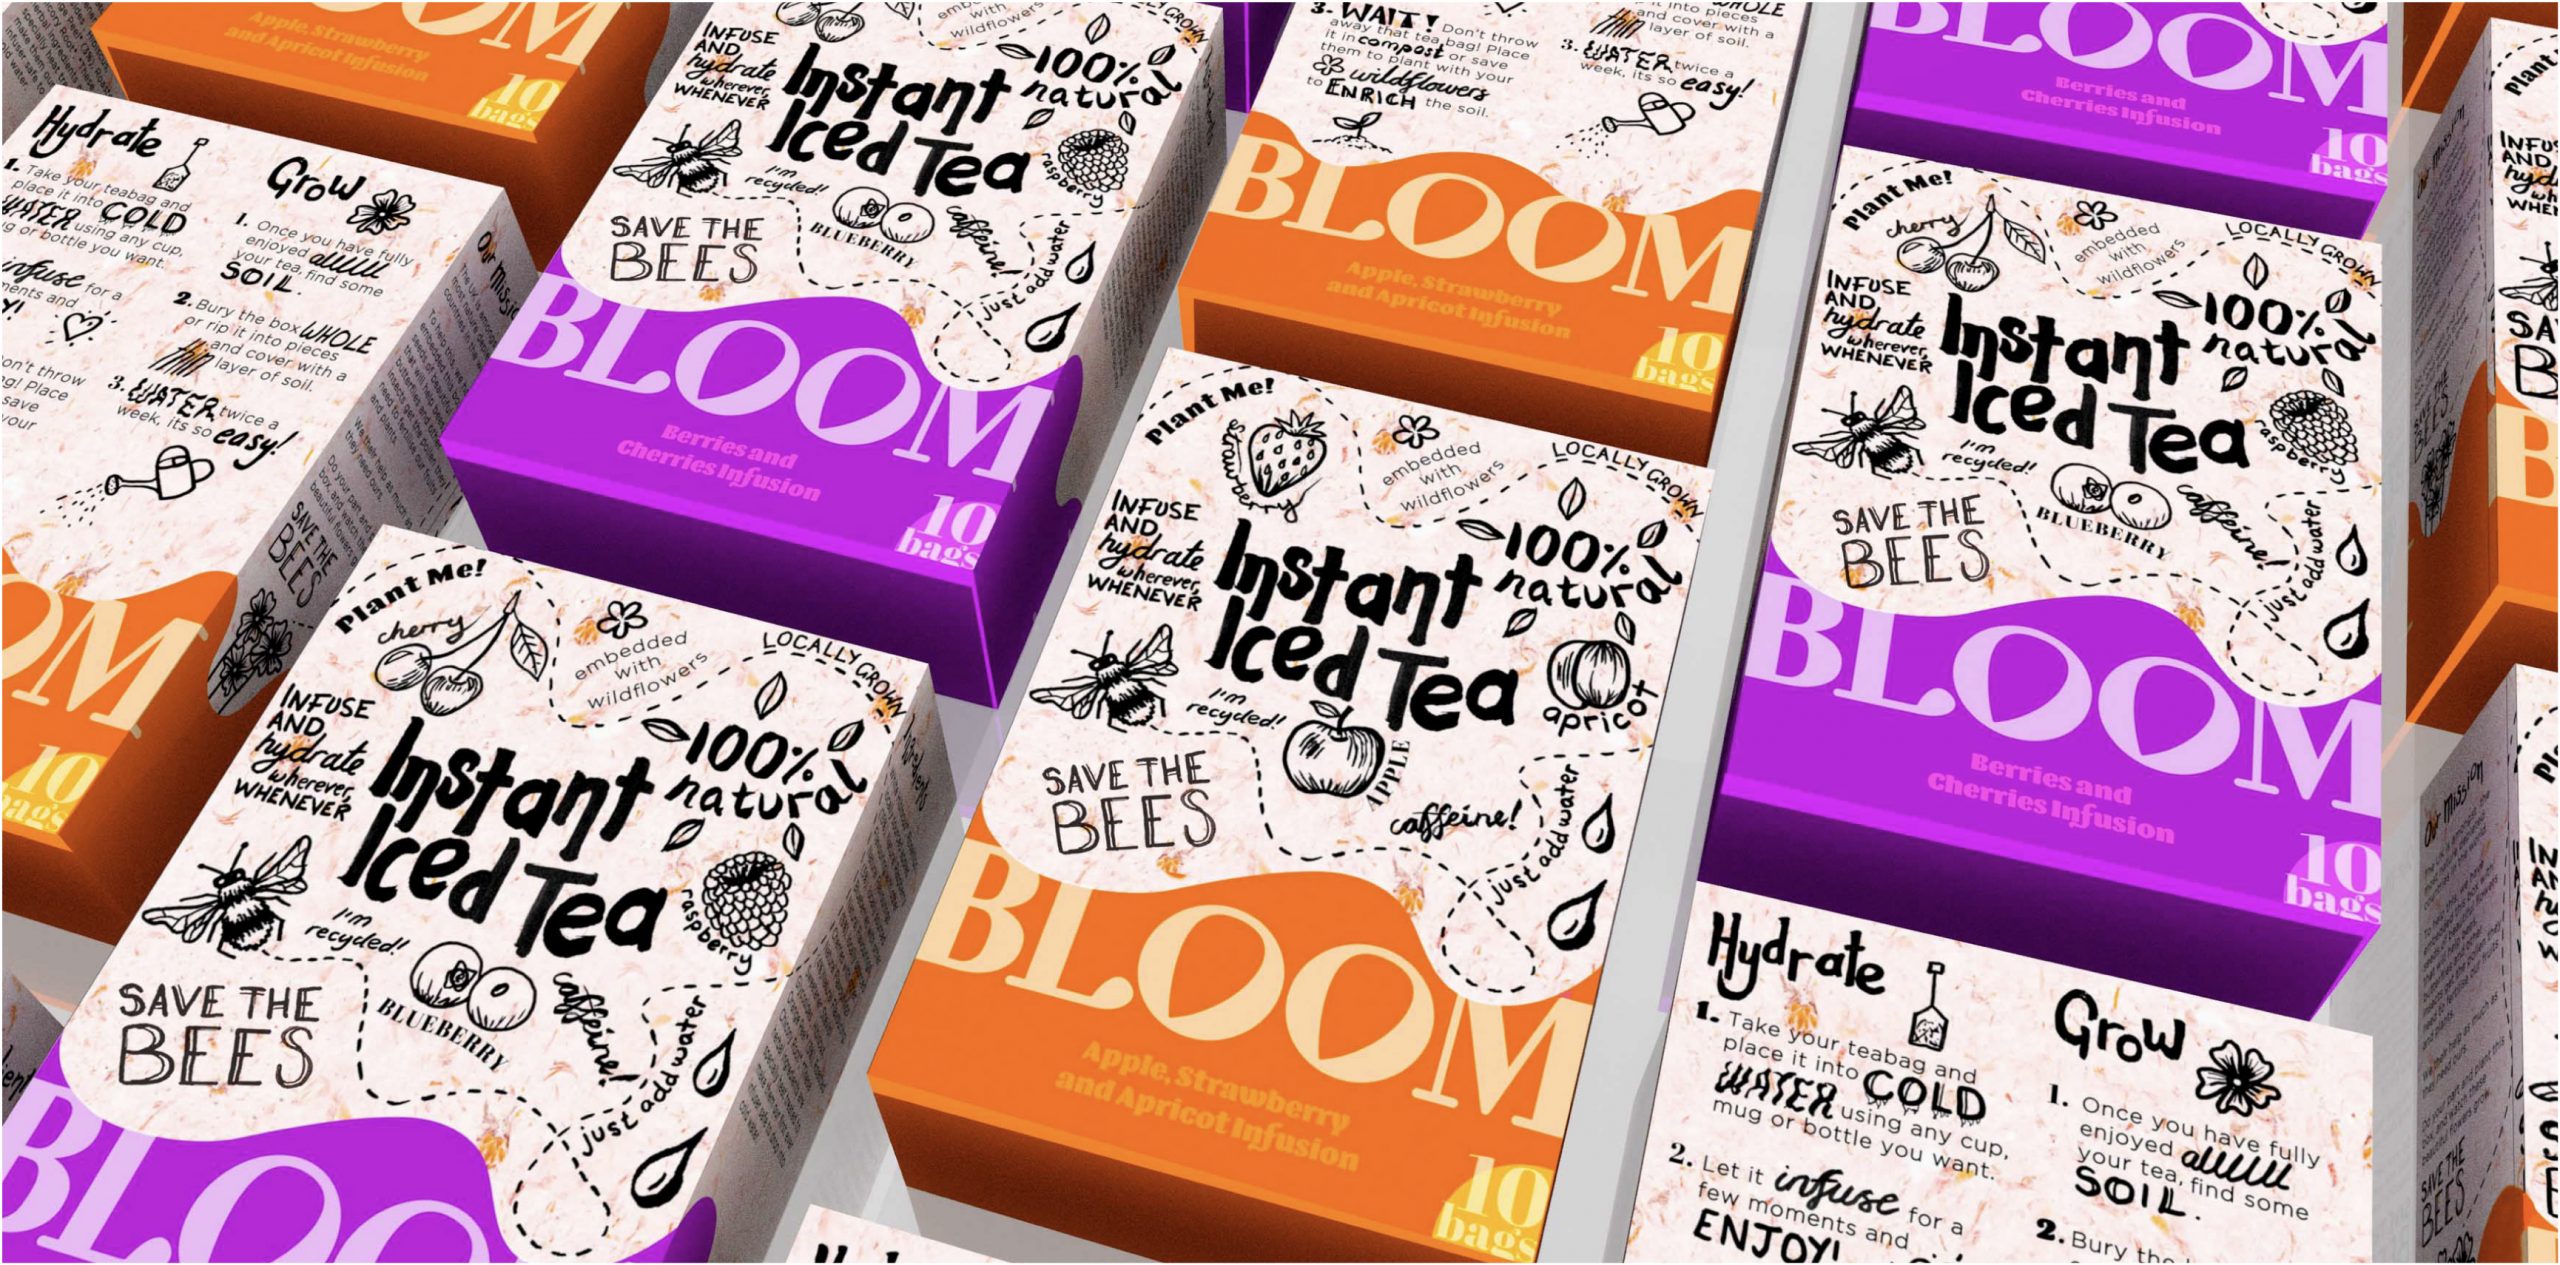 Packaging Design for Bloom Instant Iced Tea